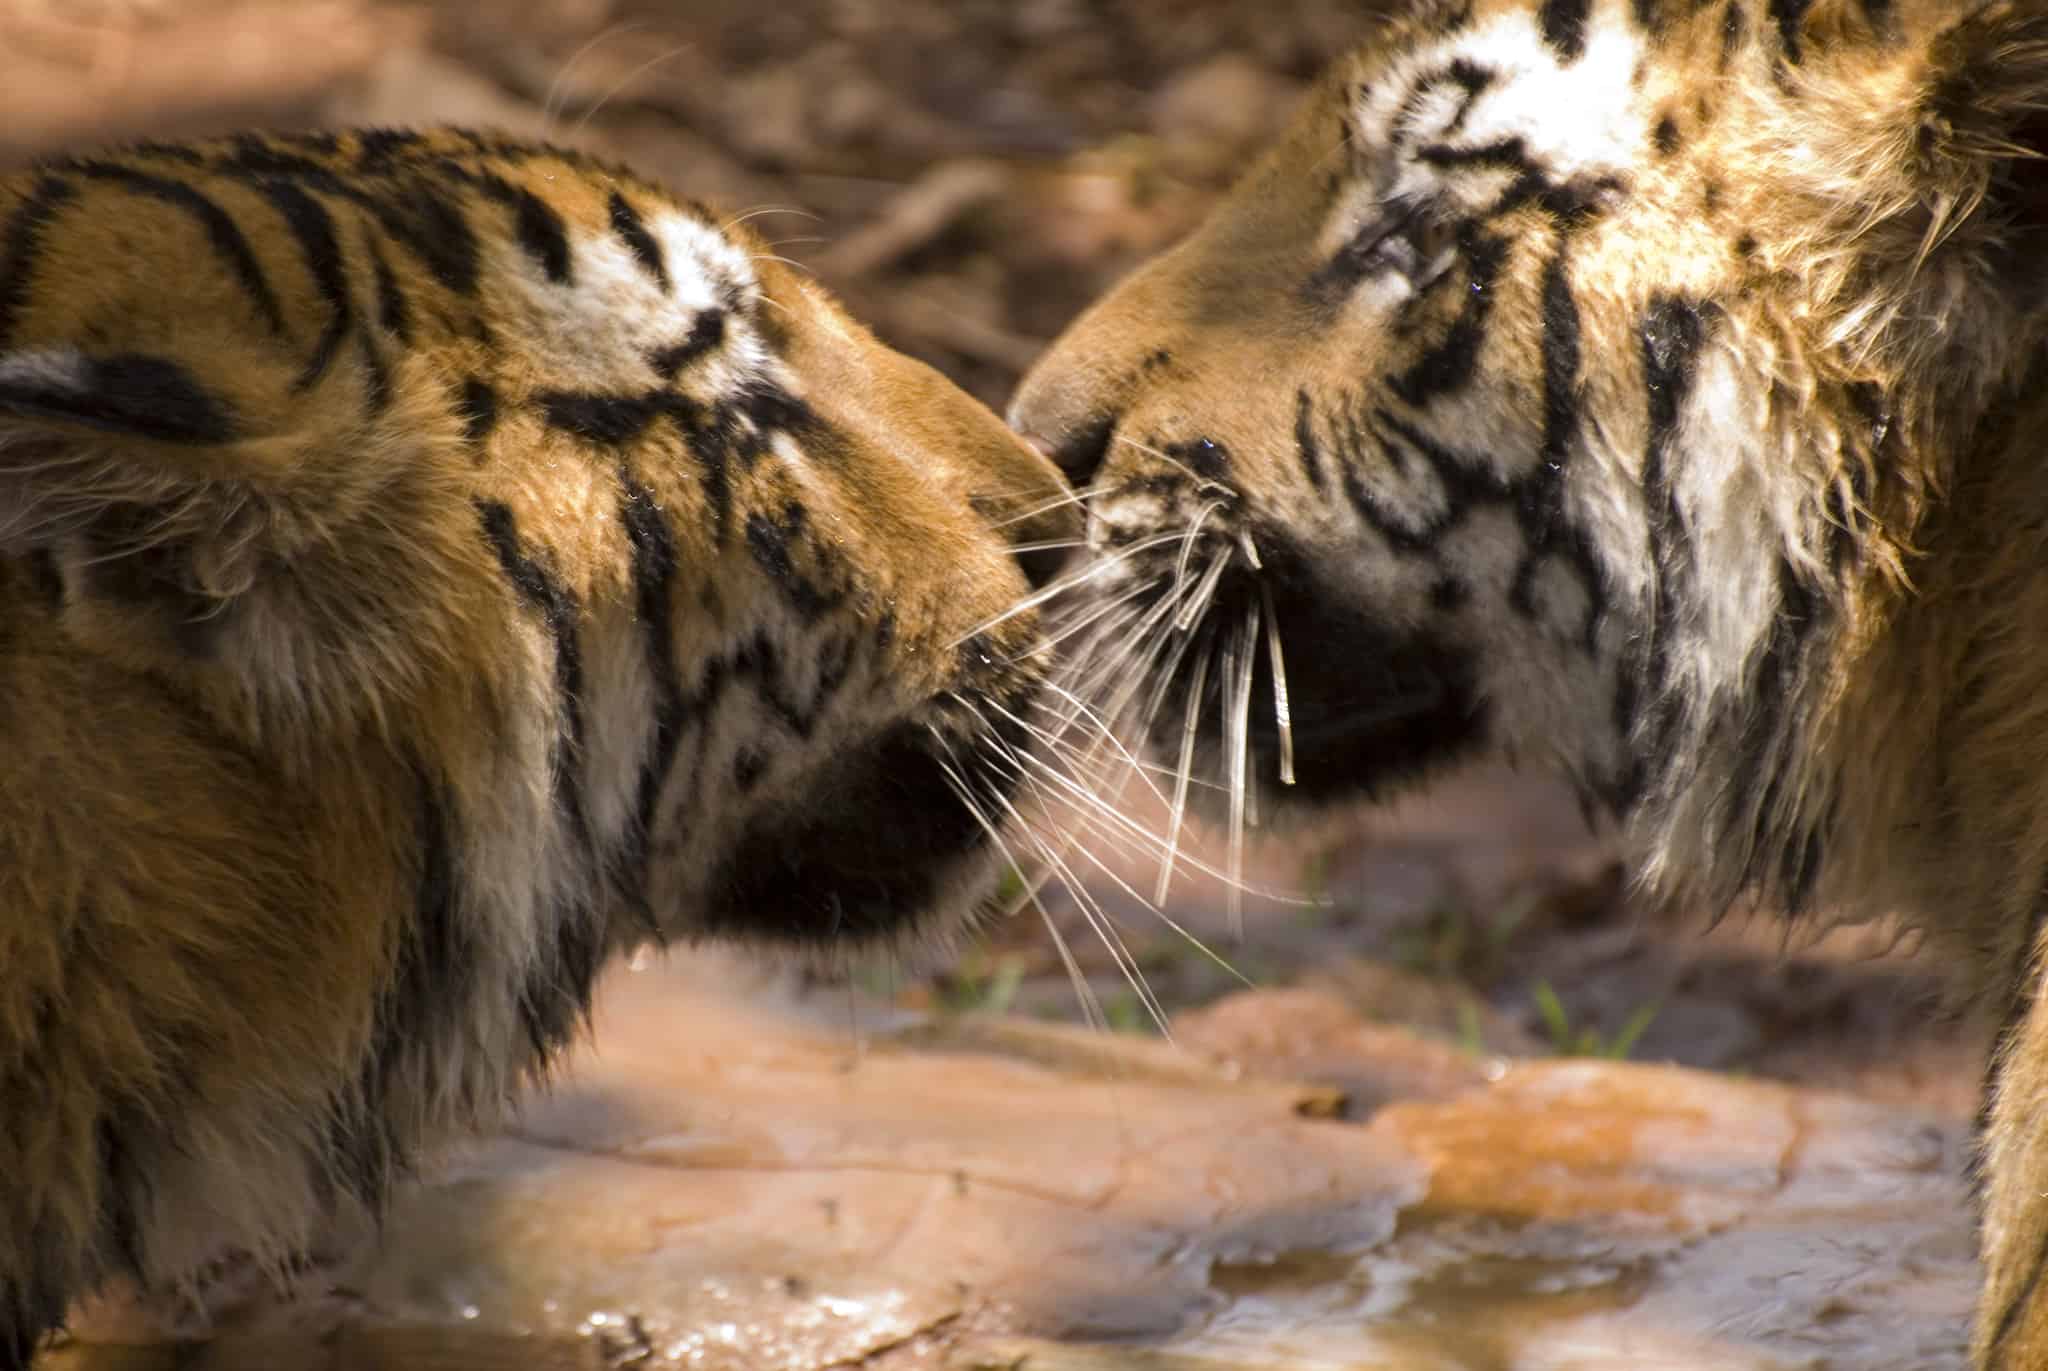 Two Bengal tigers, Karnataka, India